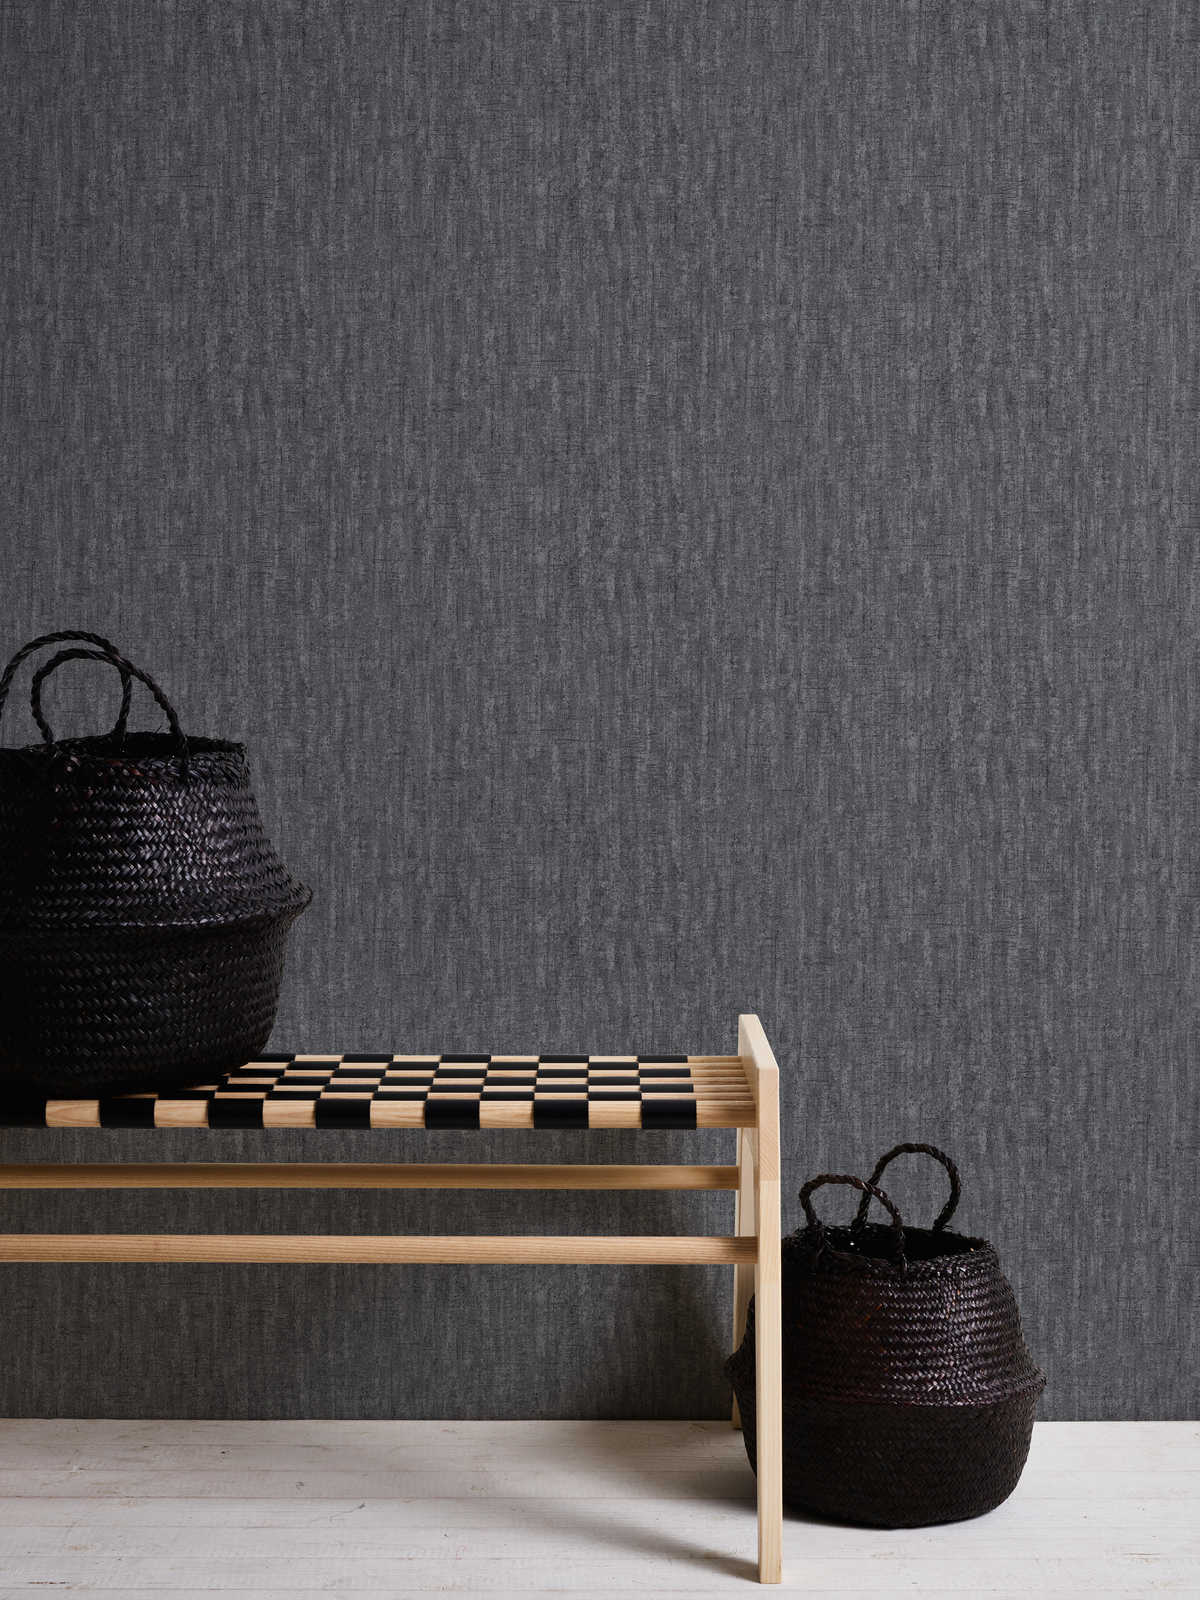             Black wallpaper with texture design & gloss effect
        